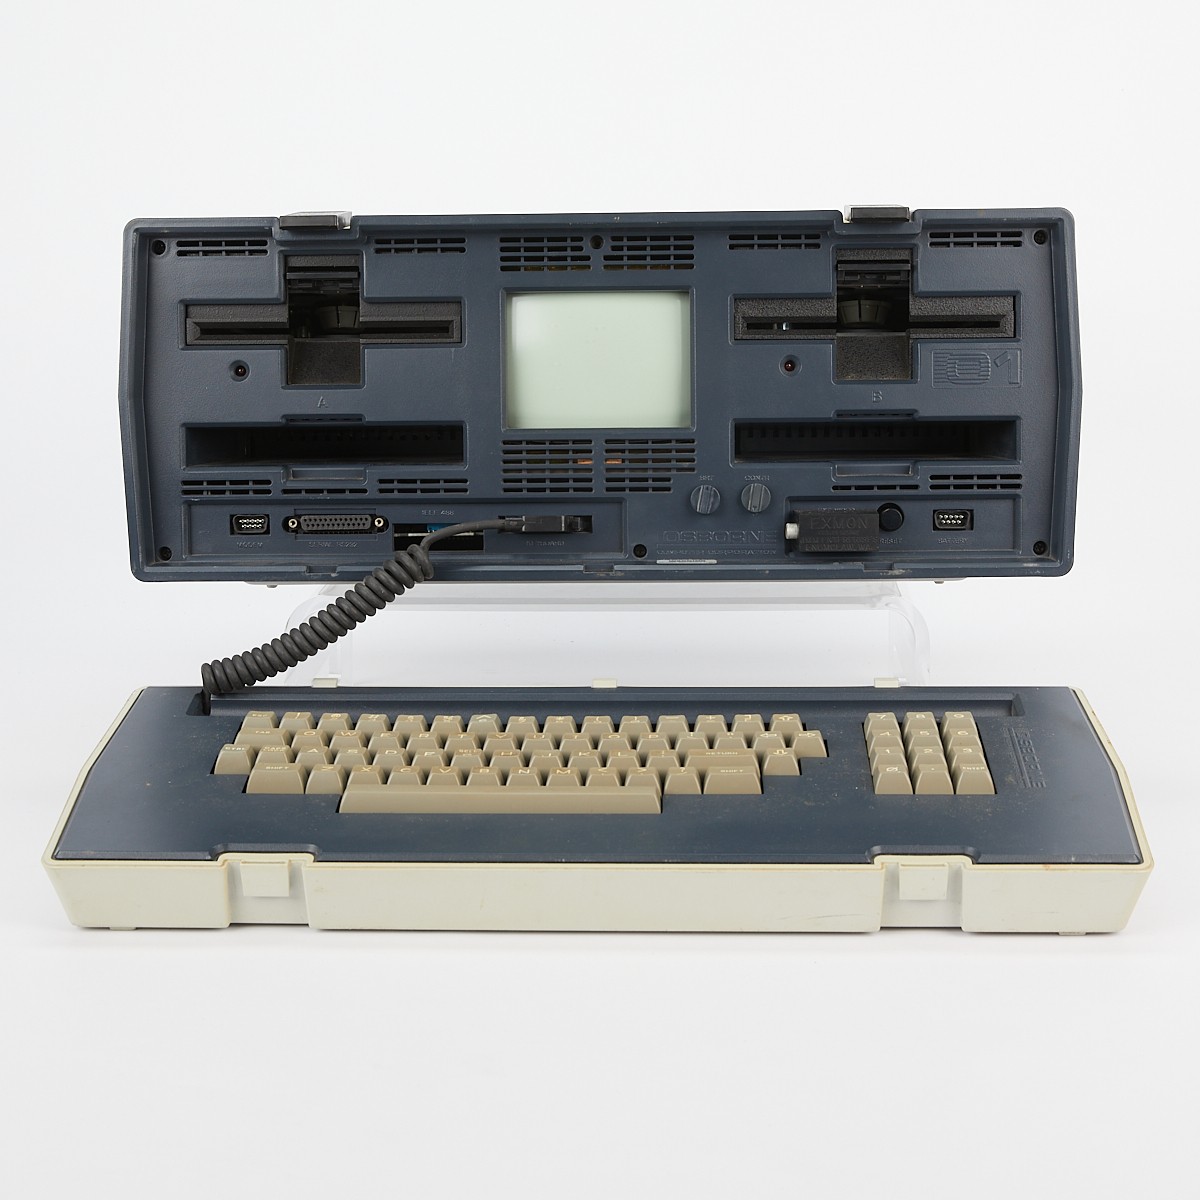 Vintage Osborn Model OCC-1 Microcomputer 1981 - Image 7 of 21